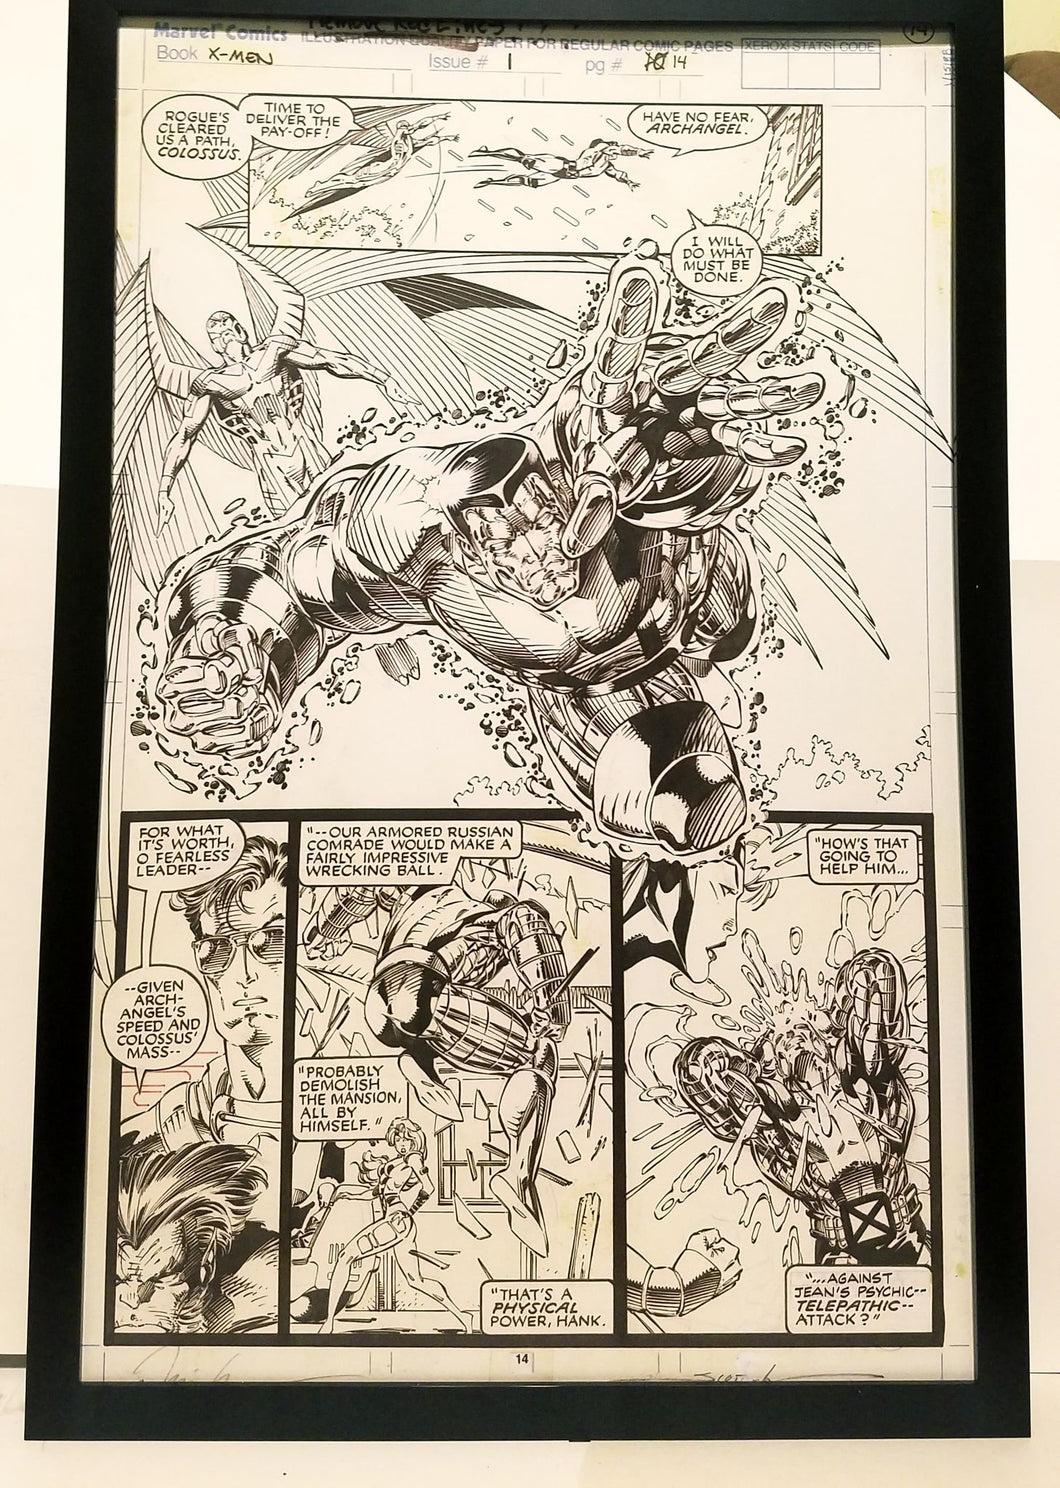 X-Men #1 pg. 14 Colossus Jim Lee 11x17 FRAMED Original Art Poster Marvel Comics